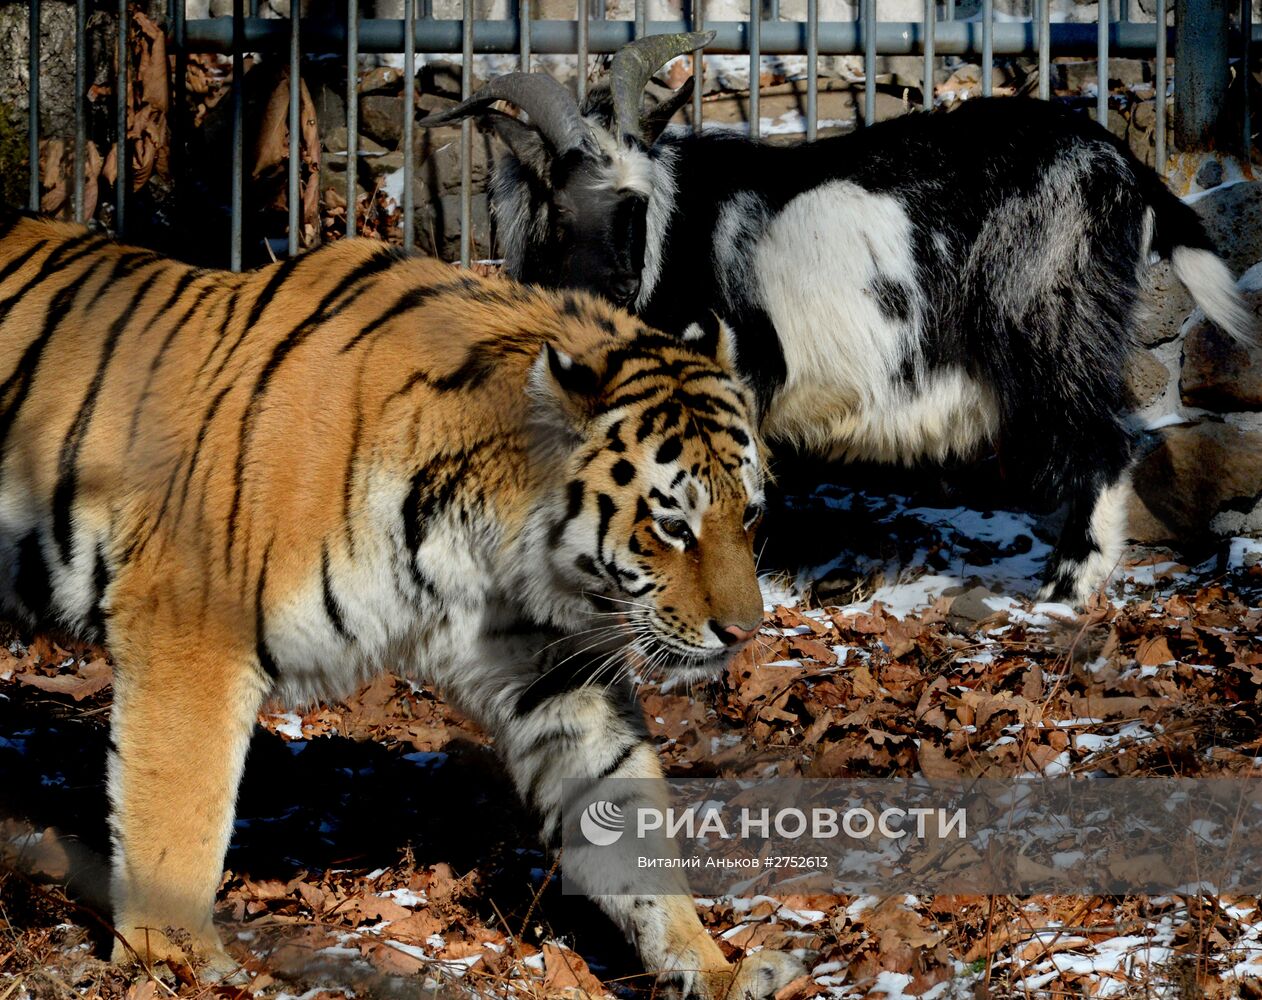 Дружба козла Тимура и тигра Амура